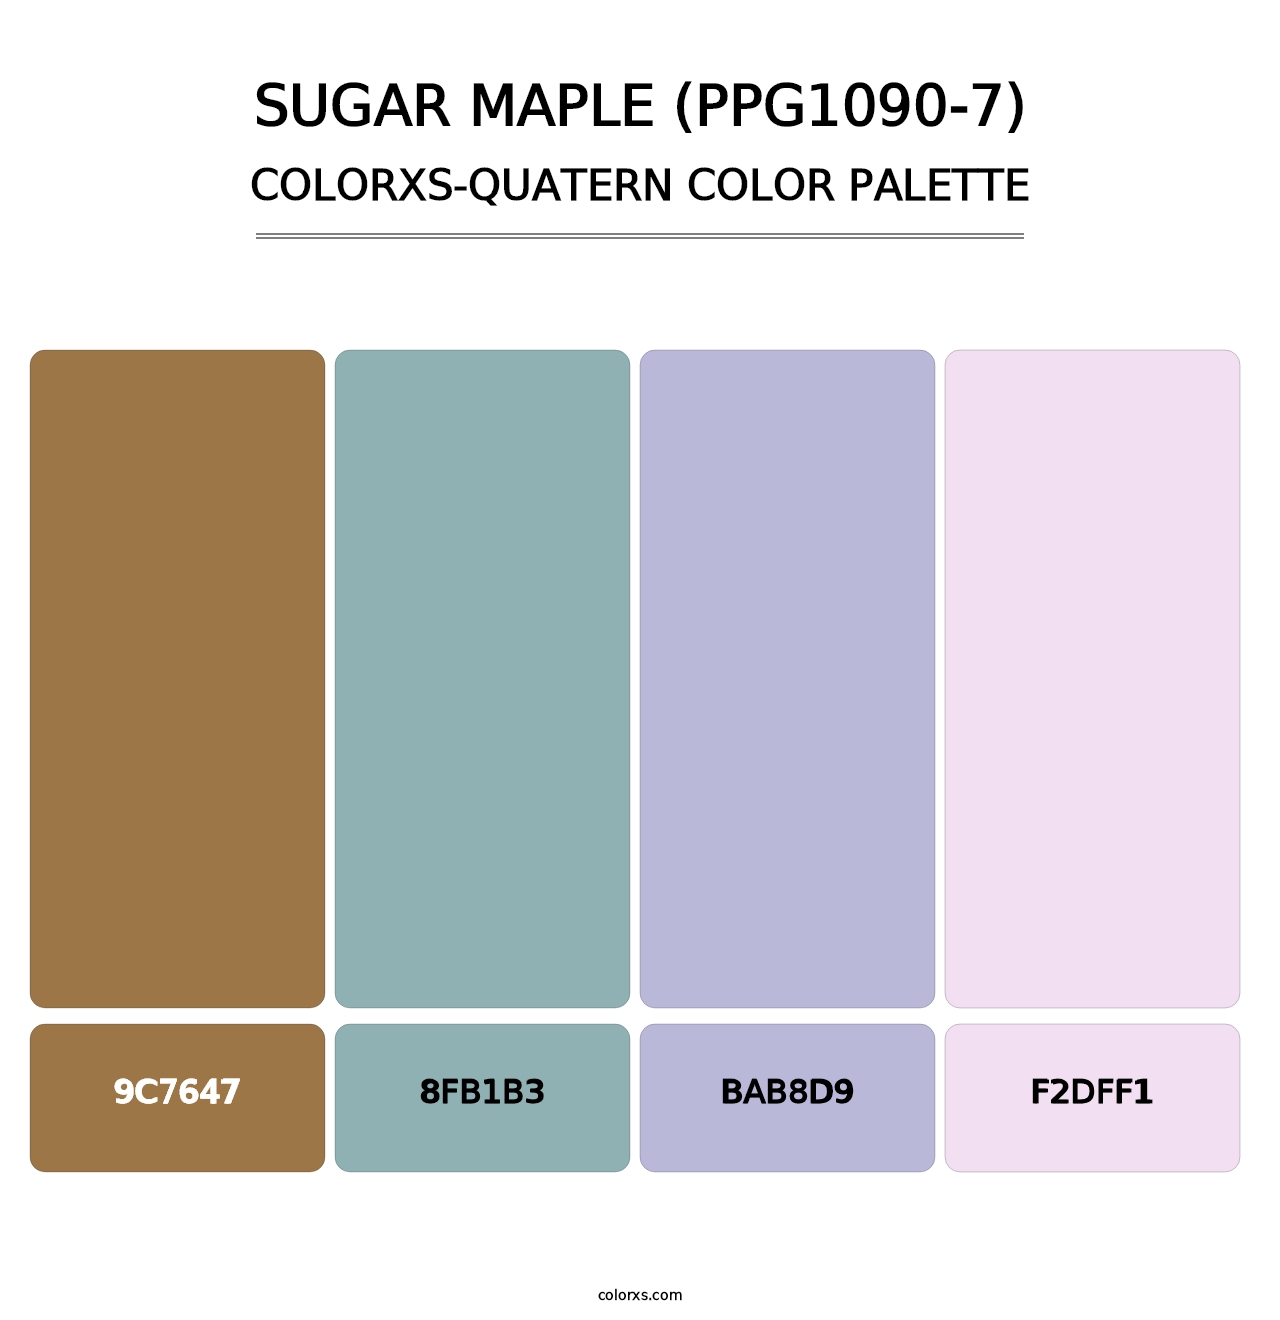 Sugar Maple (PPG1090-7) - Colorxs Quatern Palette